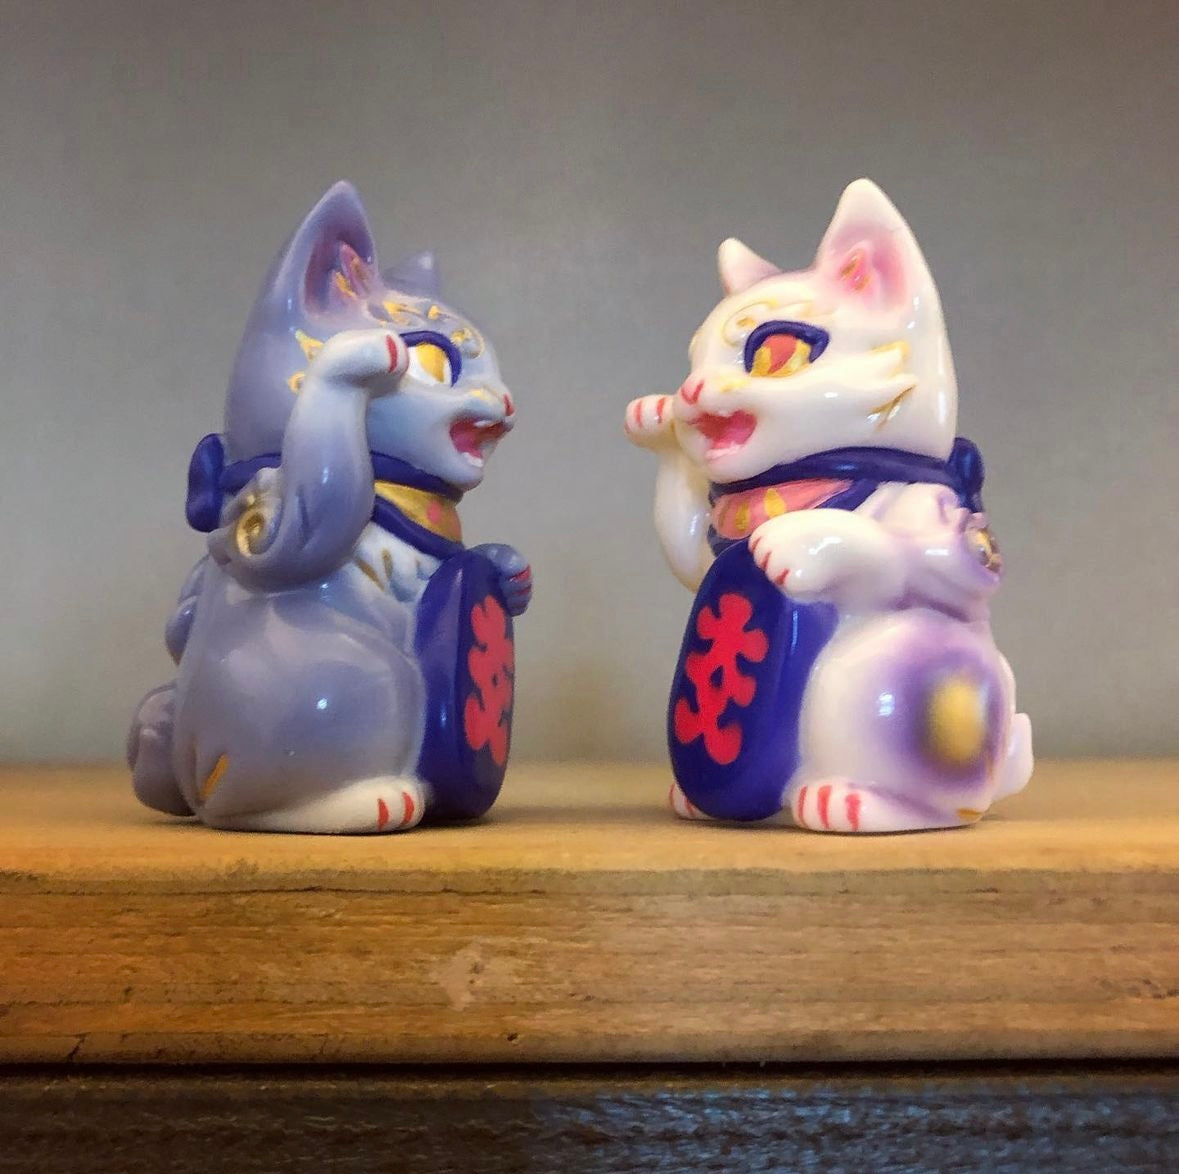 Two sitting cat figurines, Bake Lucky Cat - Taro by Genkosha, made of soft vinyl, 7cm in height.